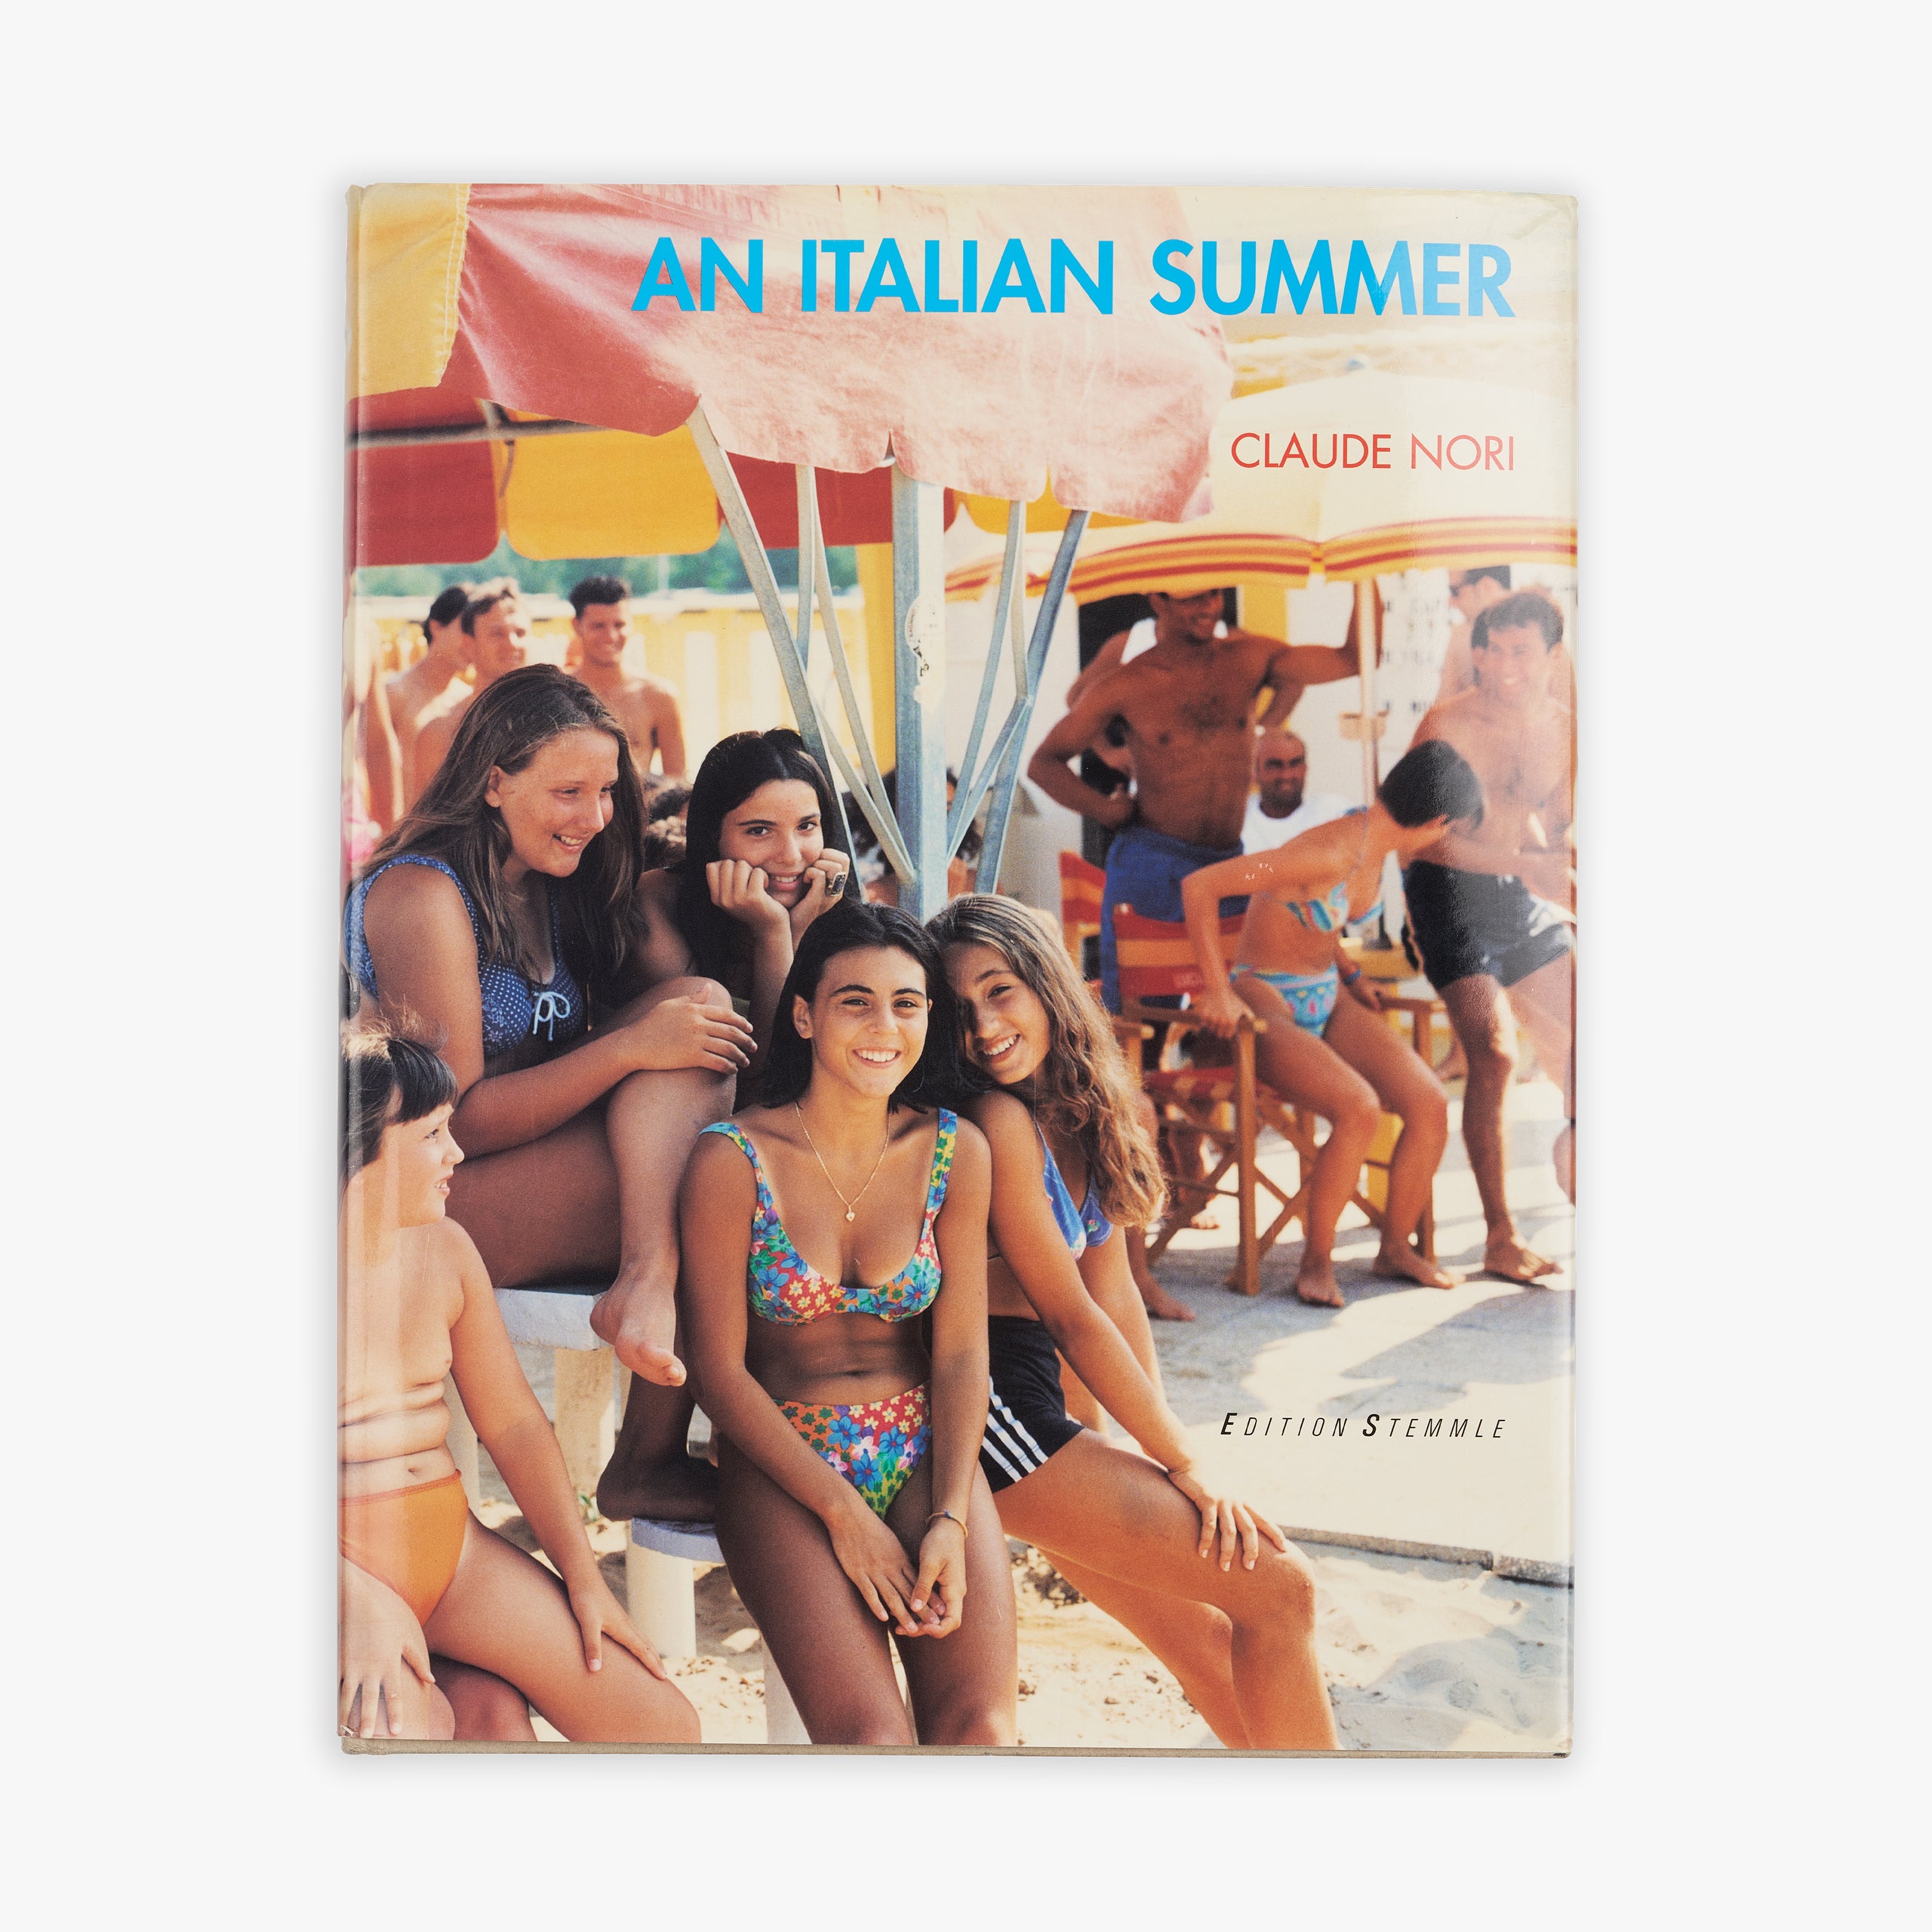 An Italian Summer by Claude Nori